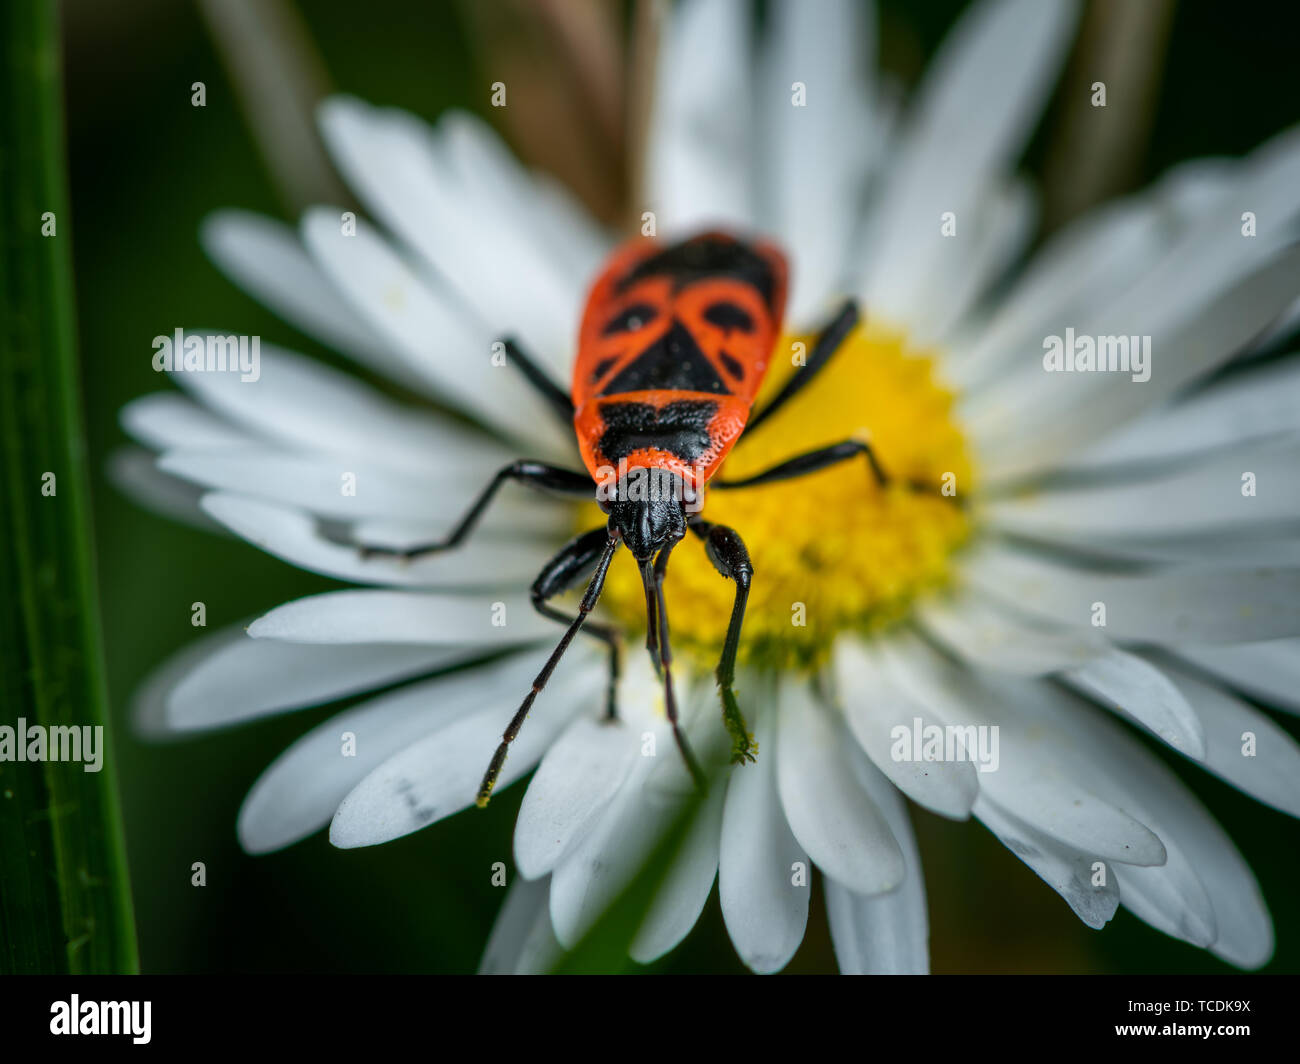 A fire bug ((Pyrrhocoris apterus) sitting on a daisy Stock Photo